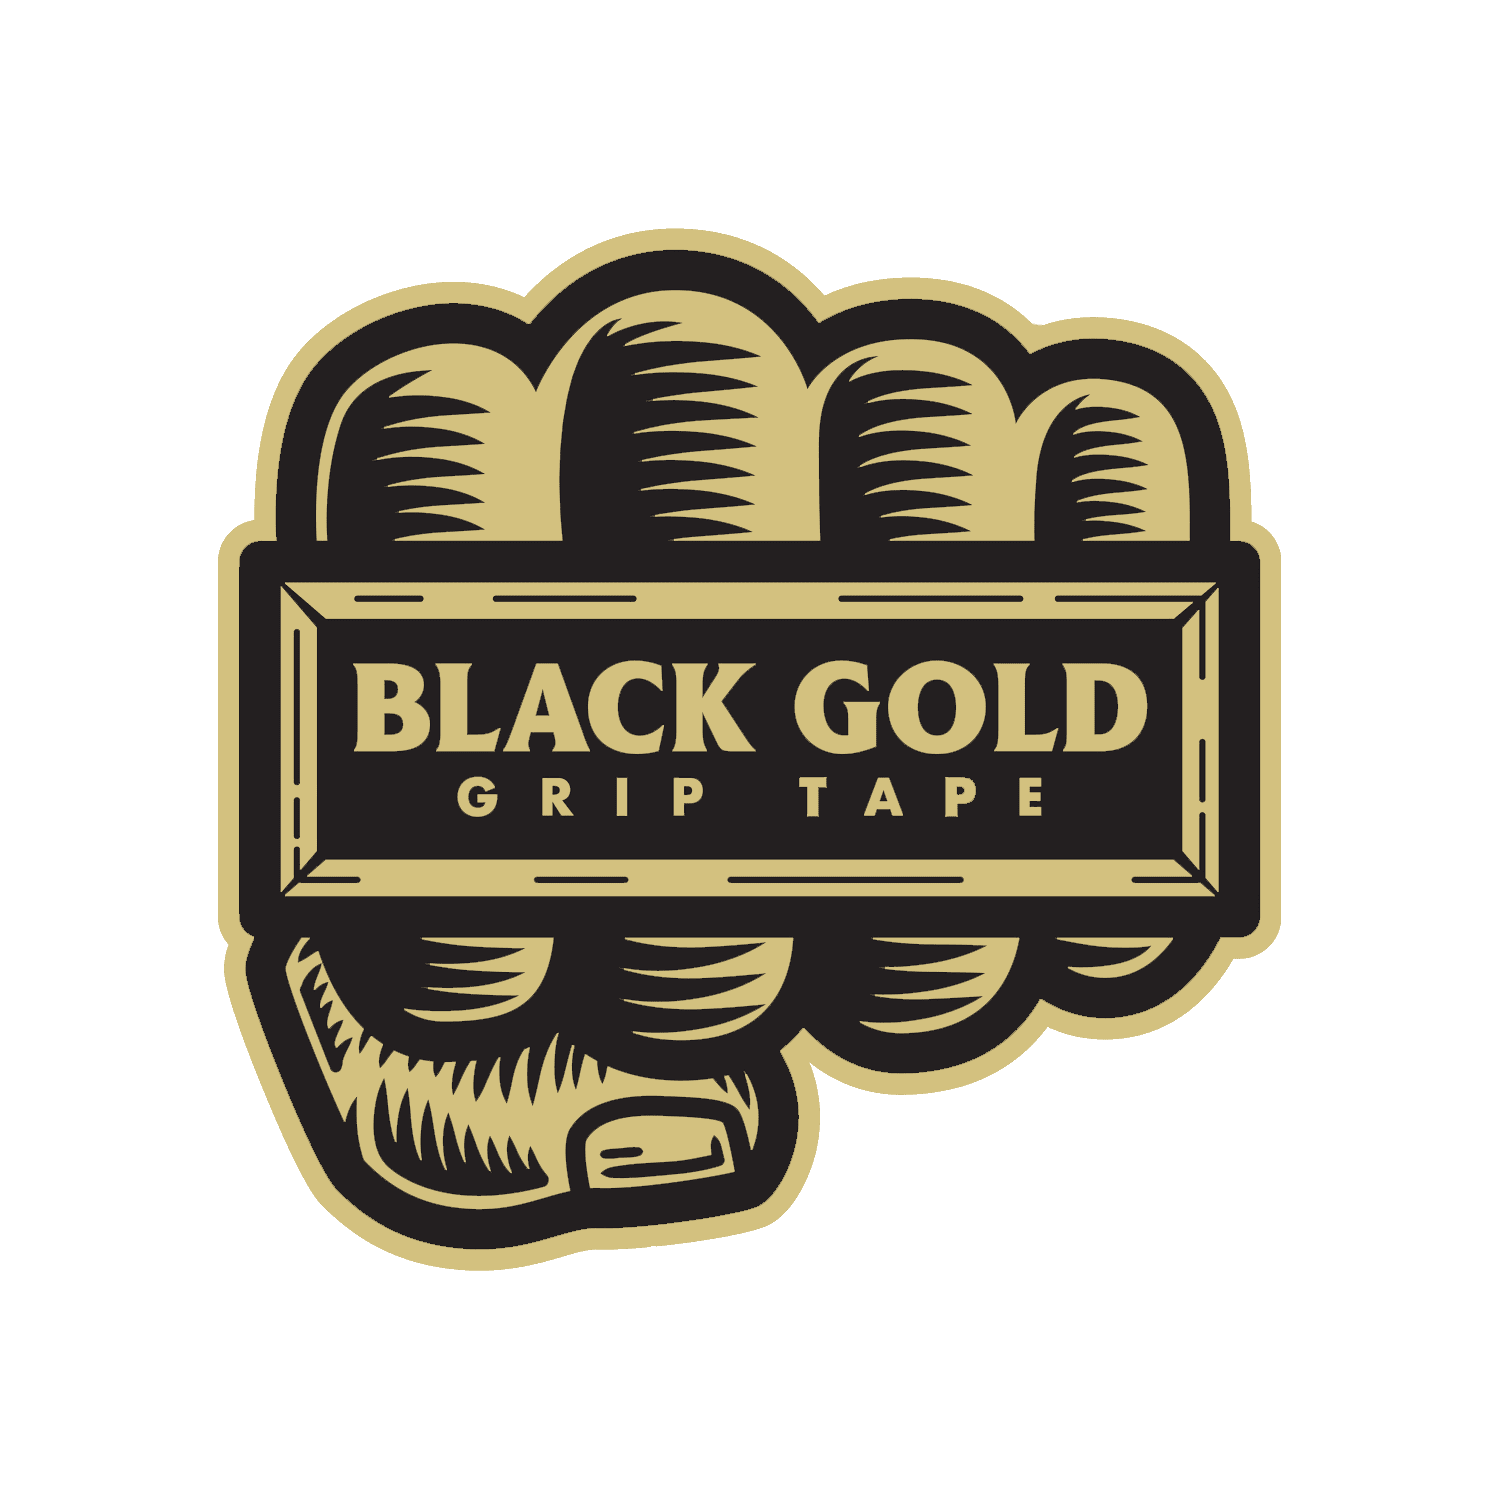 Black Gold Grip Tape fist logo graphic